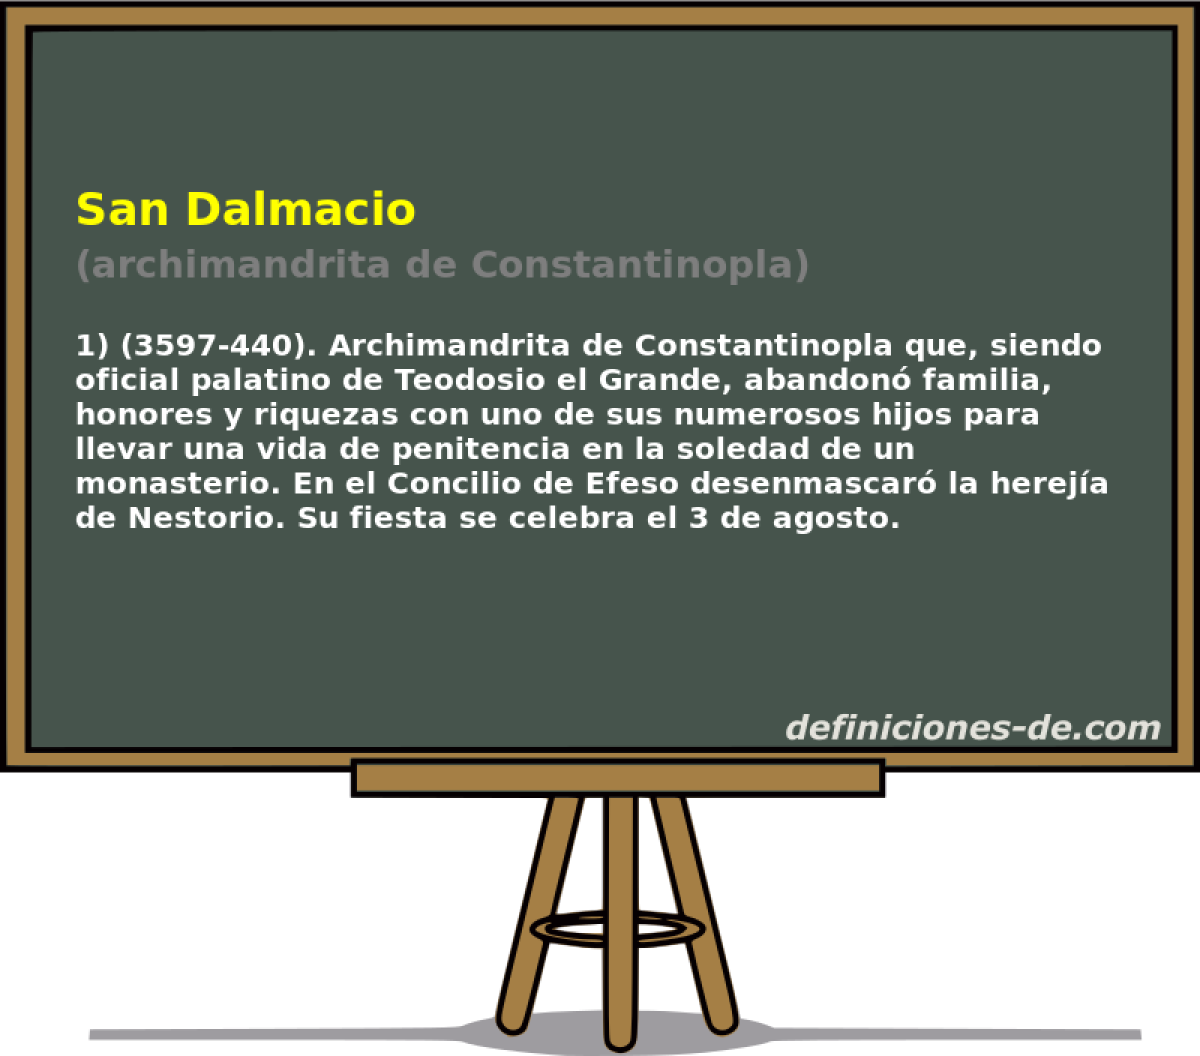 San Dalmacio (archimandrita de Constantinopla)